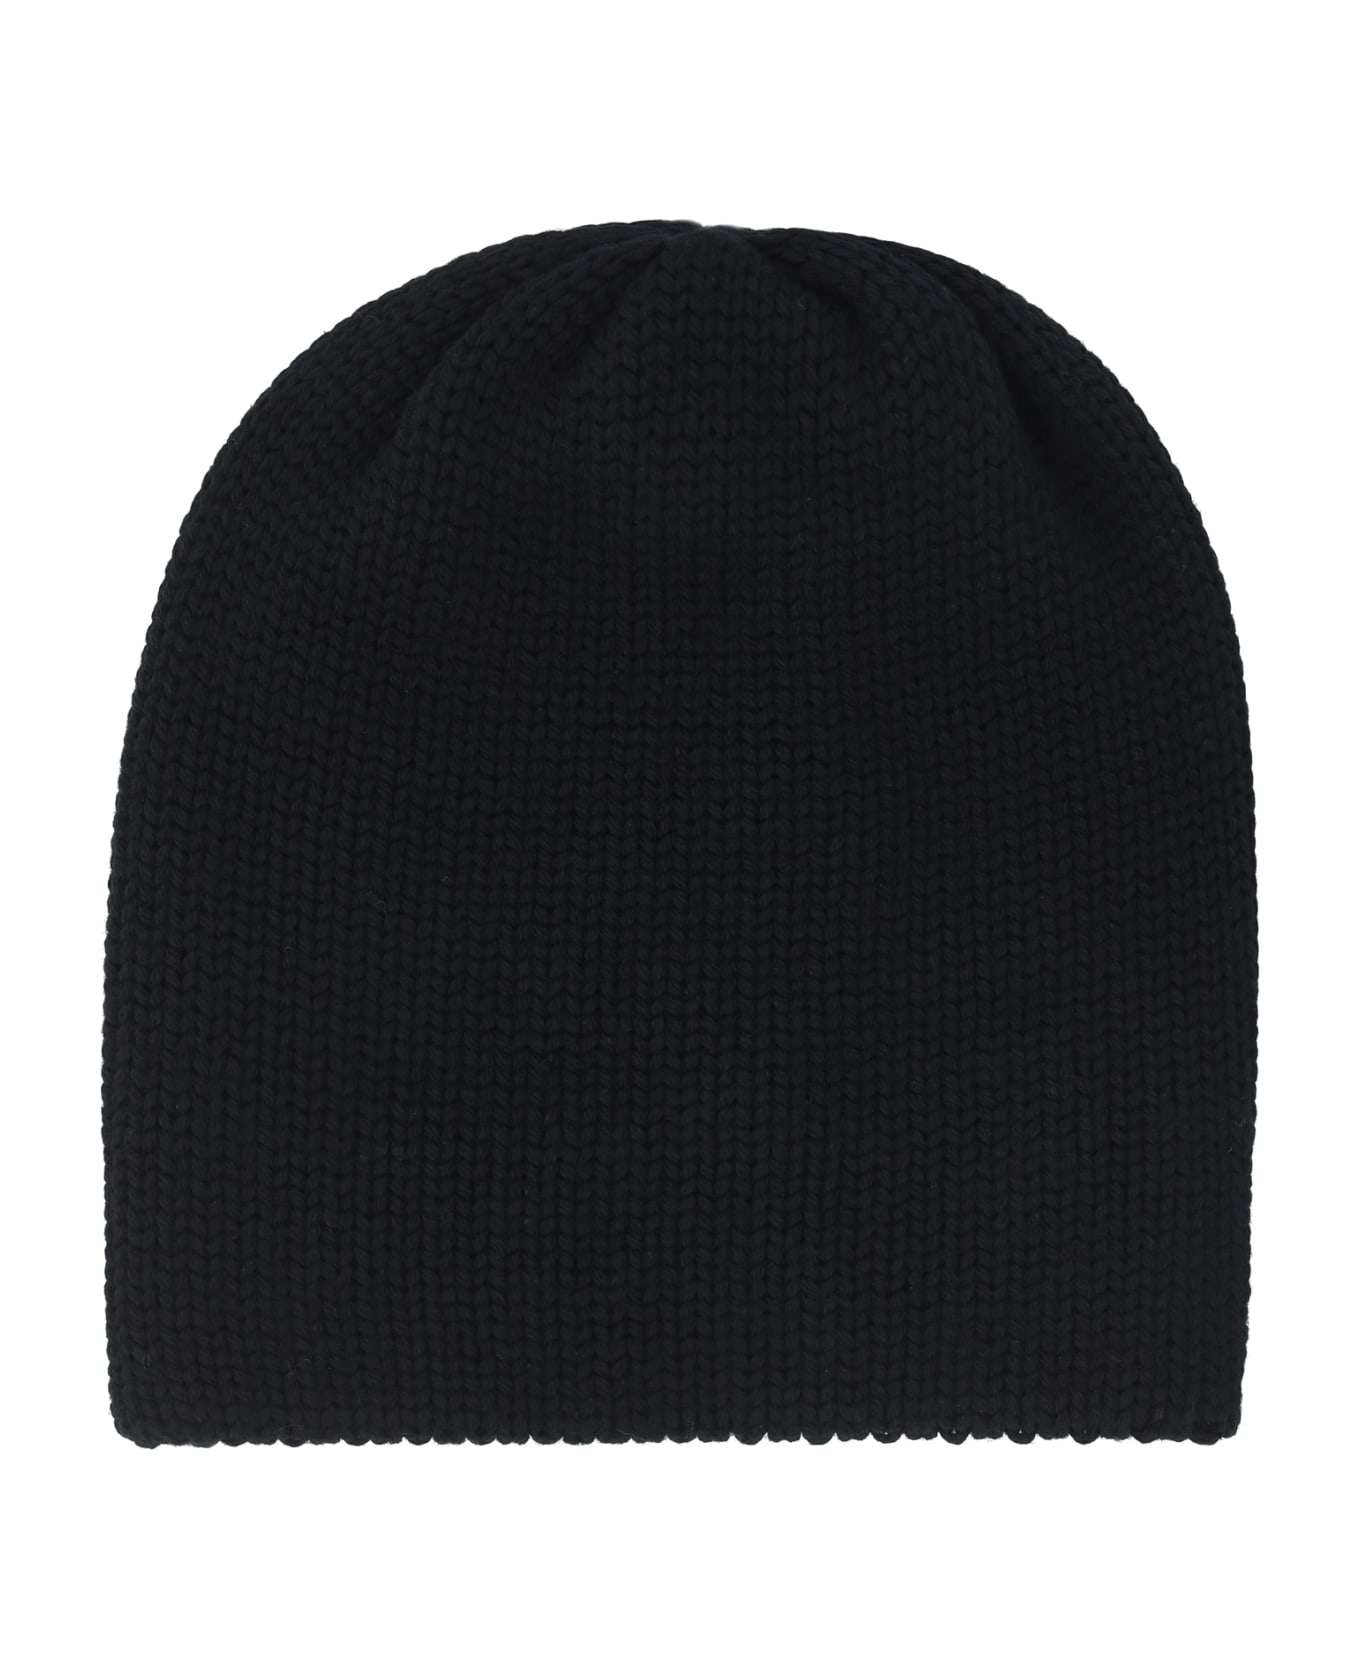 Moncler Grenoble Beanie Tricot Hat - Black